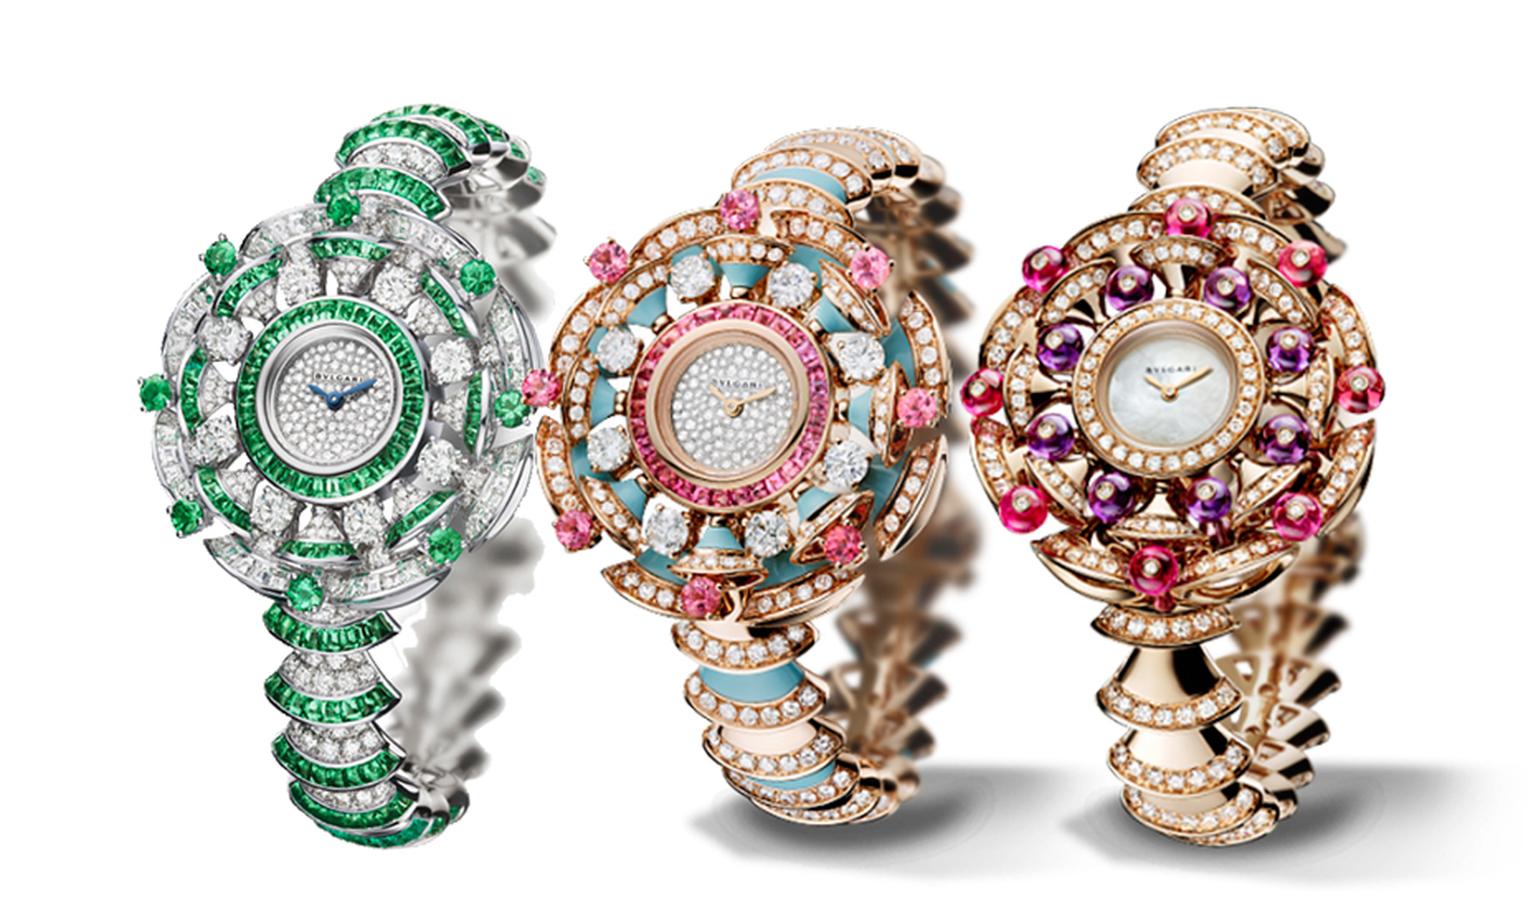 The Bulgari Diva high jewellery watch 